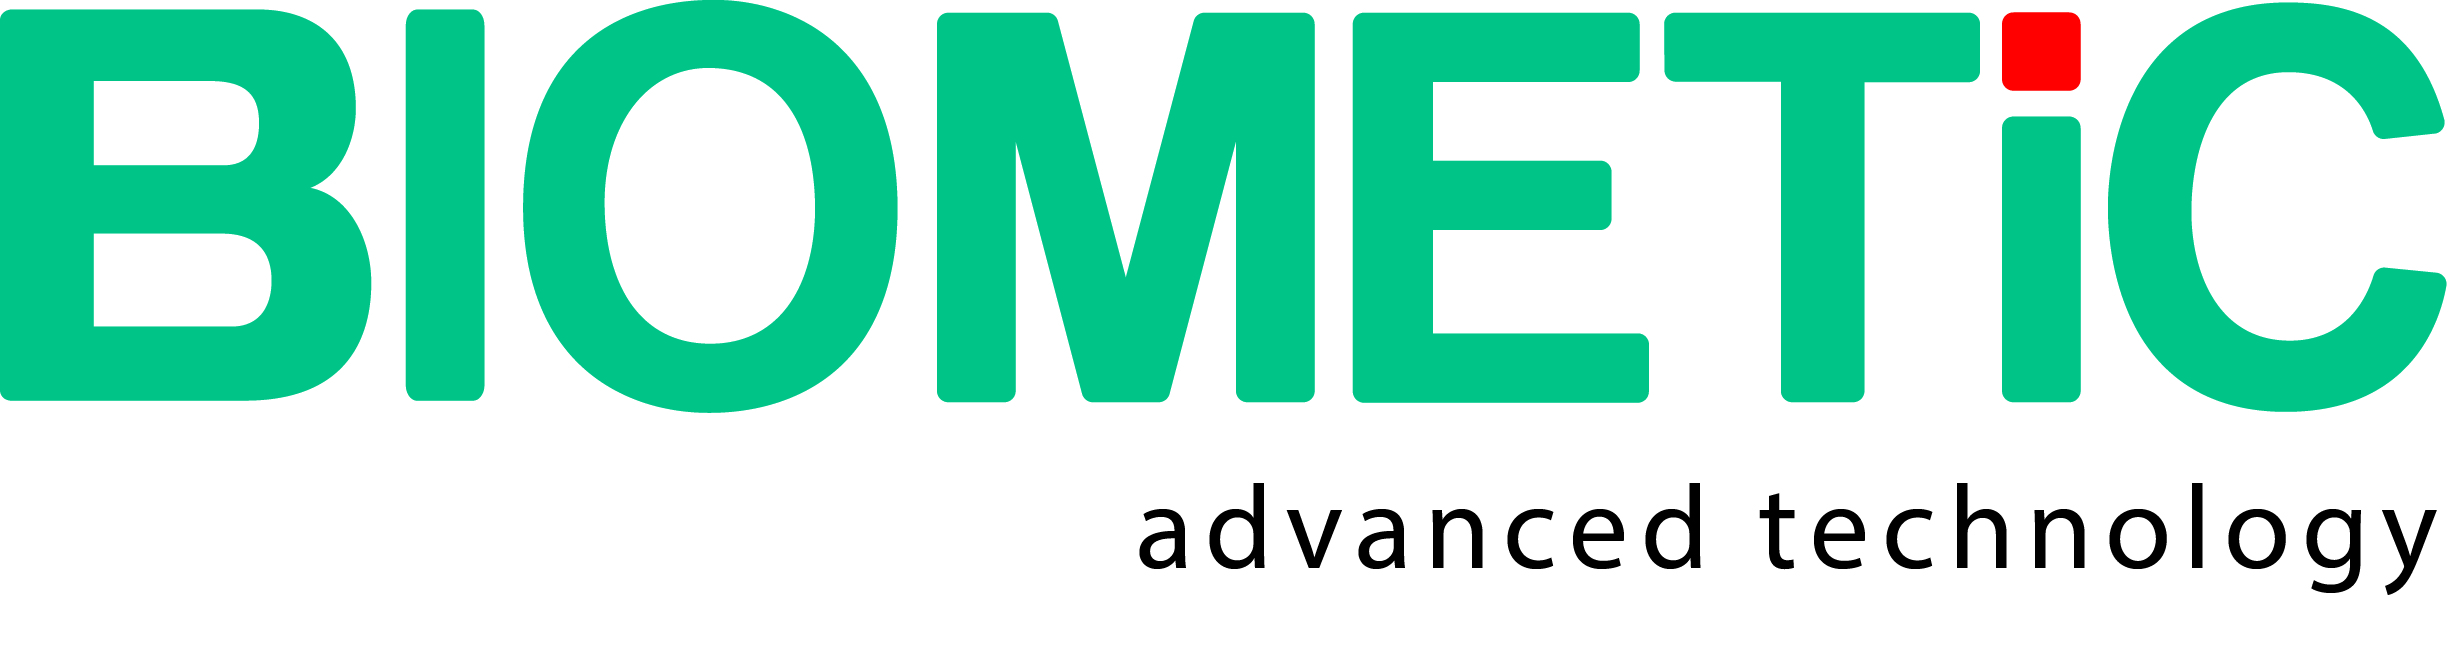 BIOMETiC Advanced Technology Logo.jpg